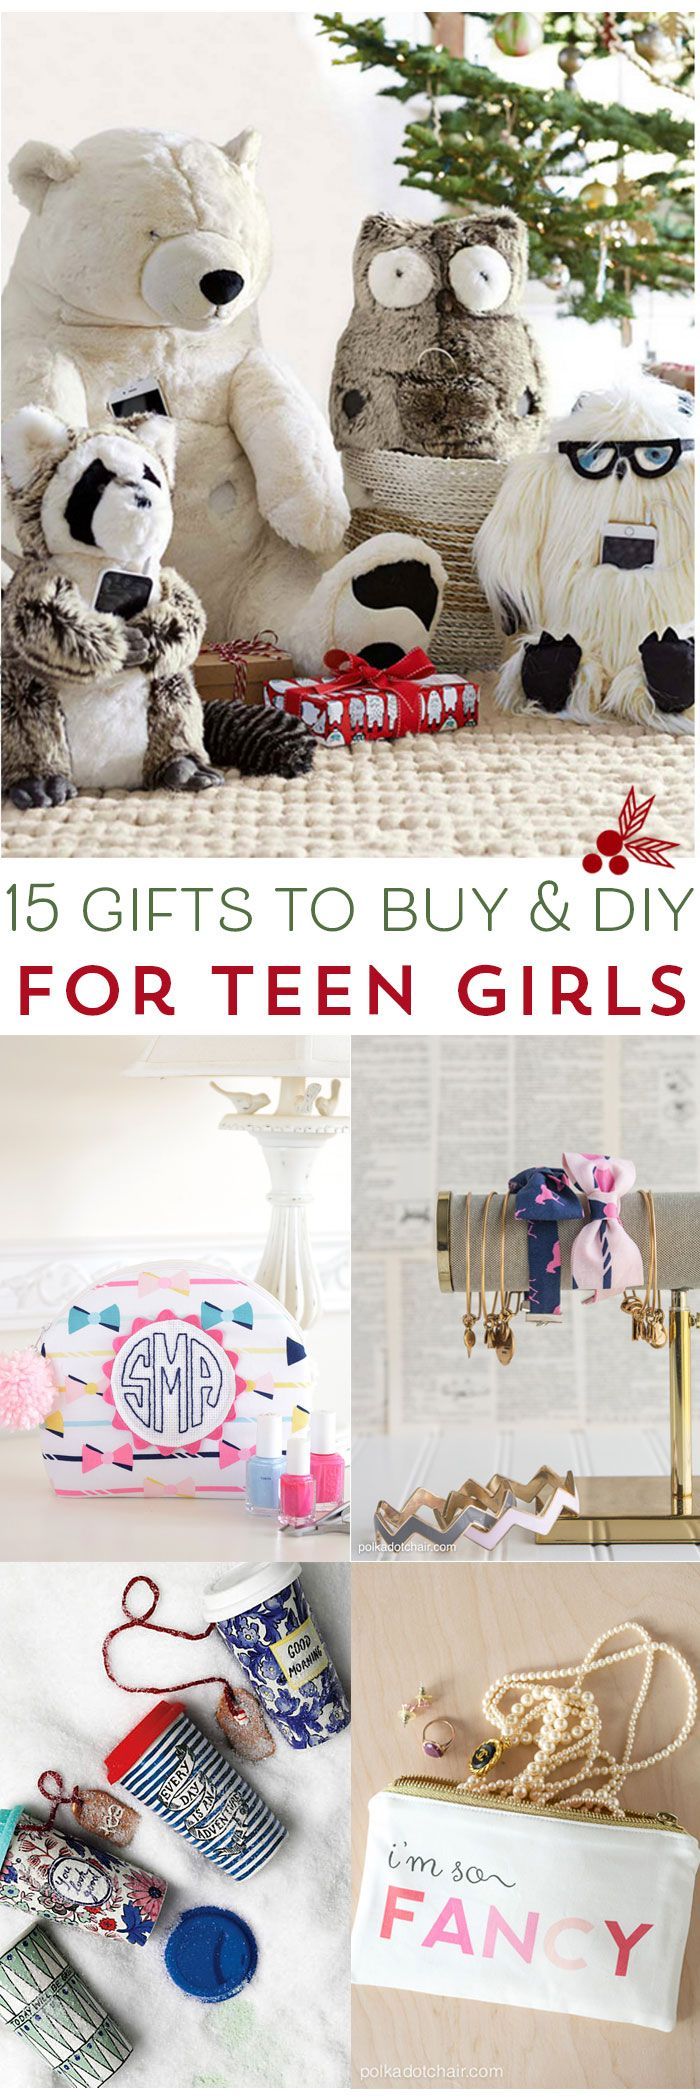 19 trendy diy For Teens ideas